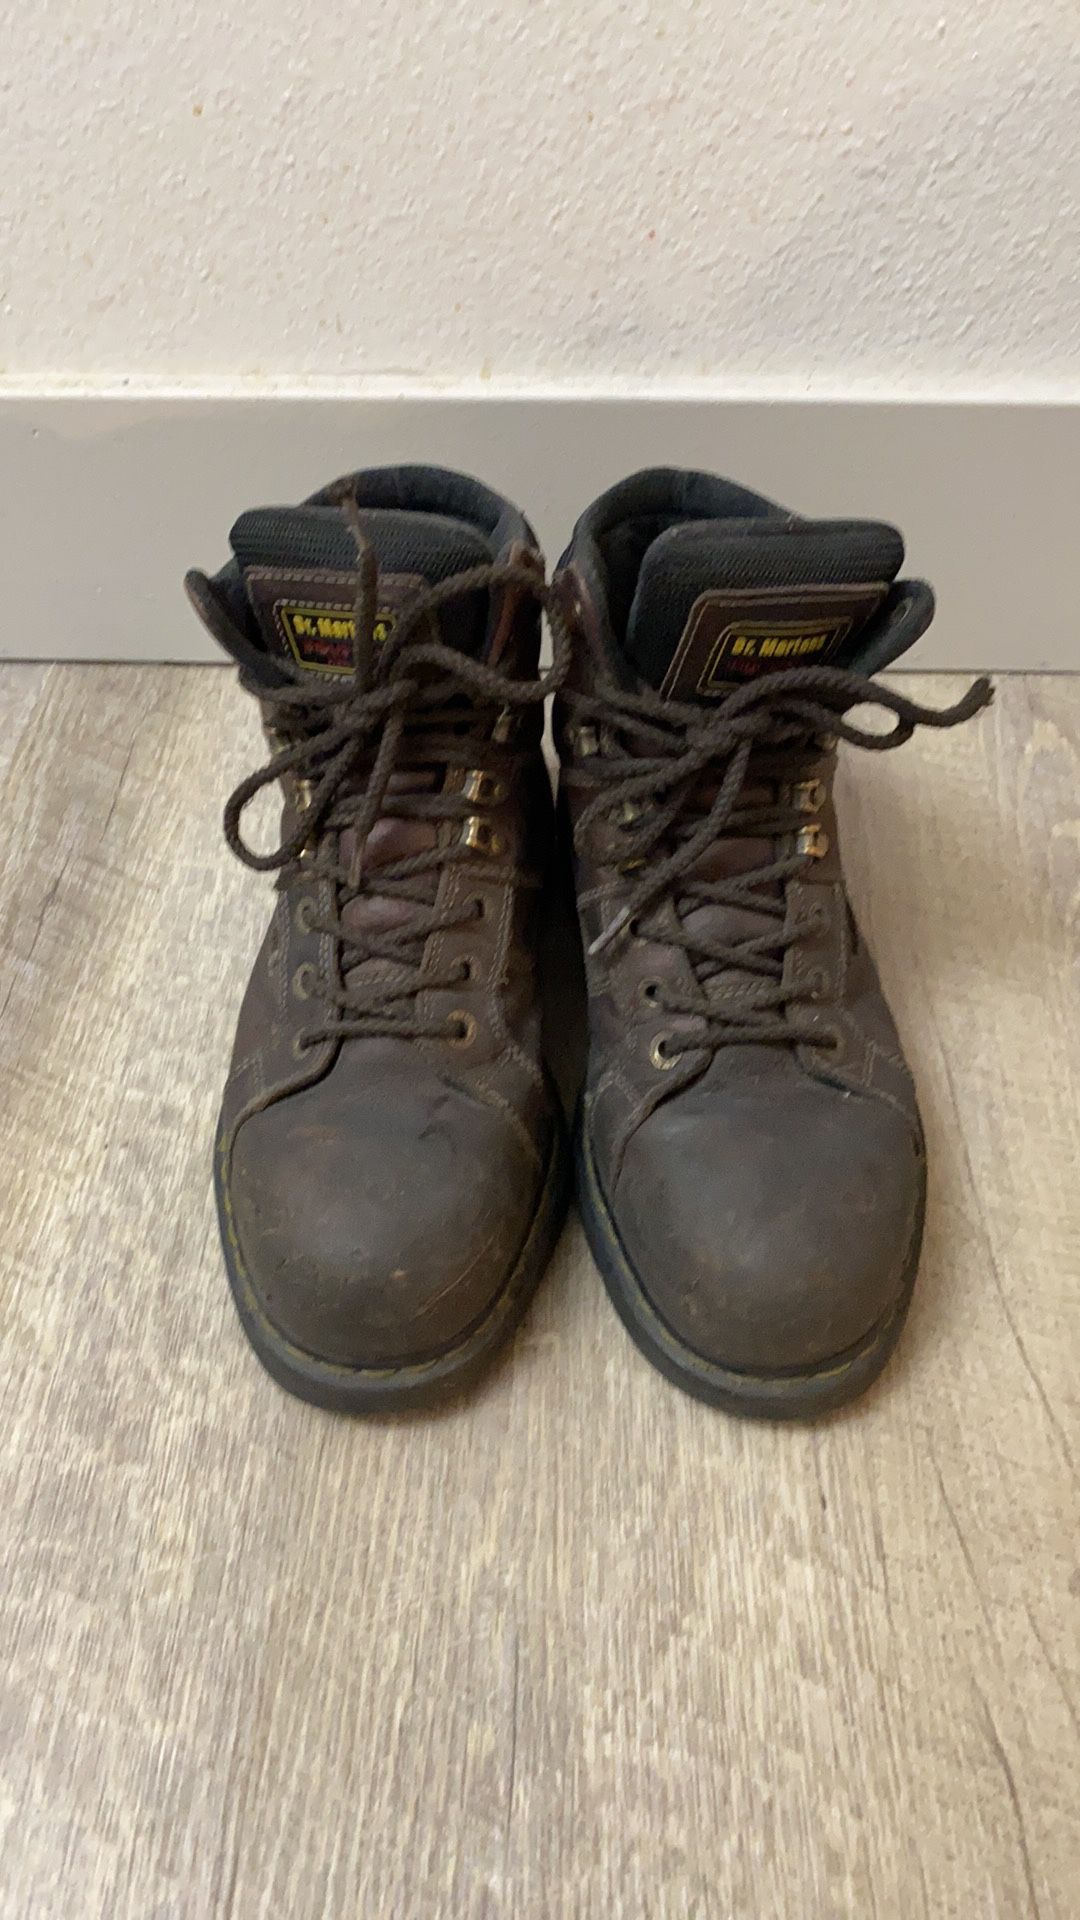 Dr Martens Steel Toe Boots